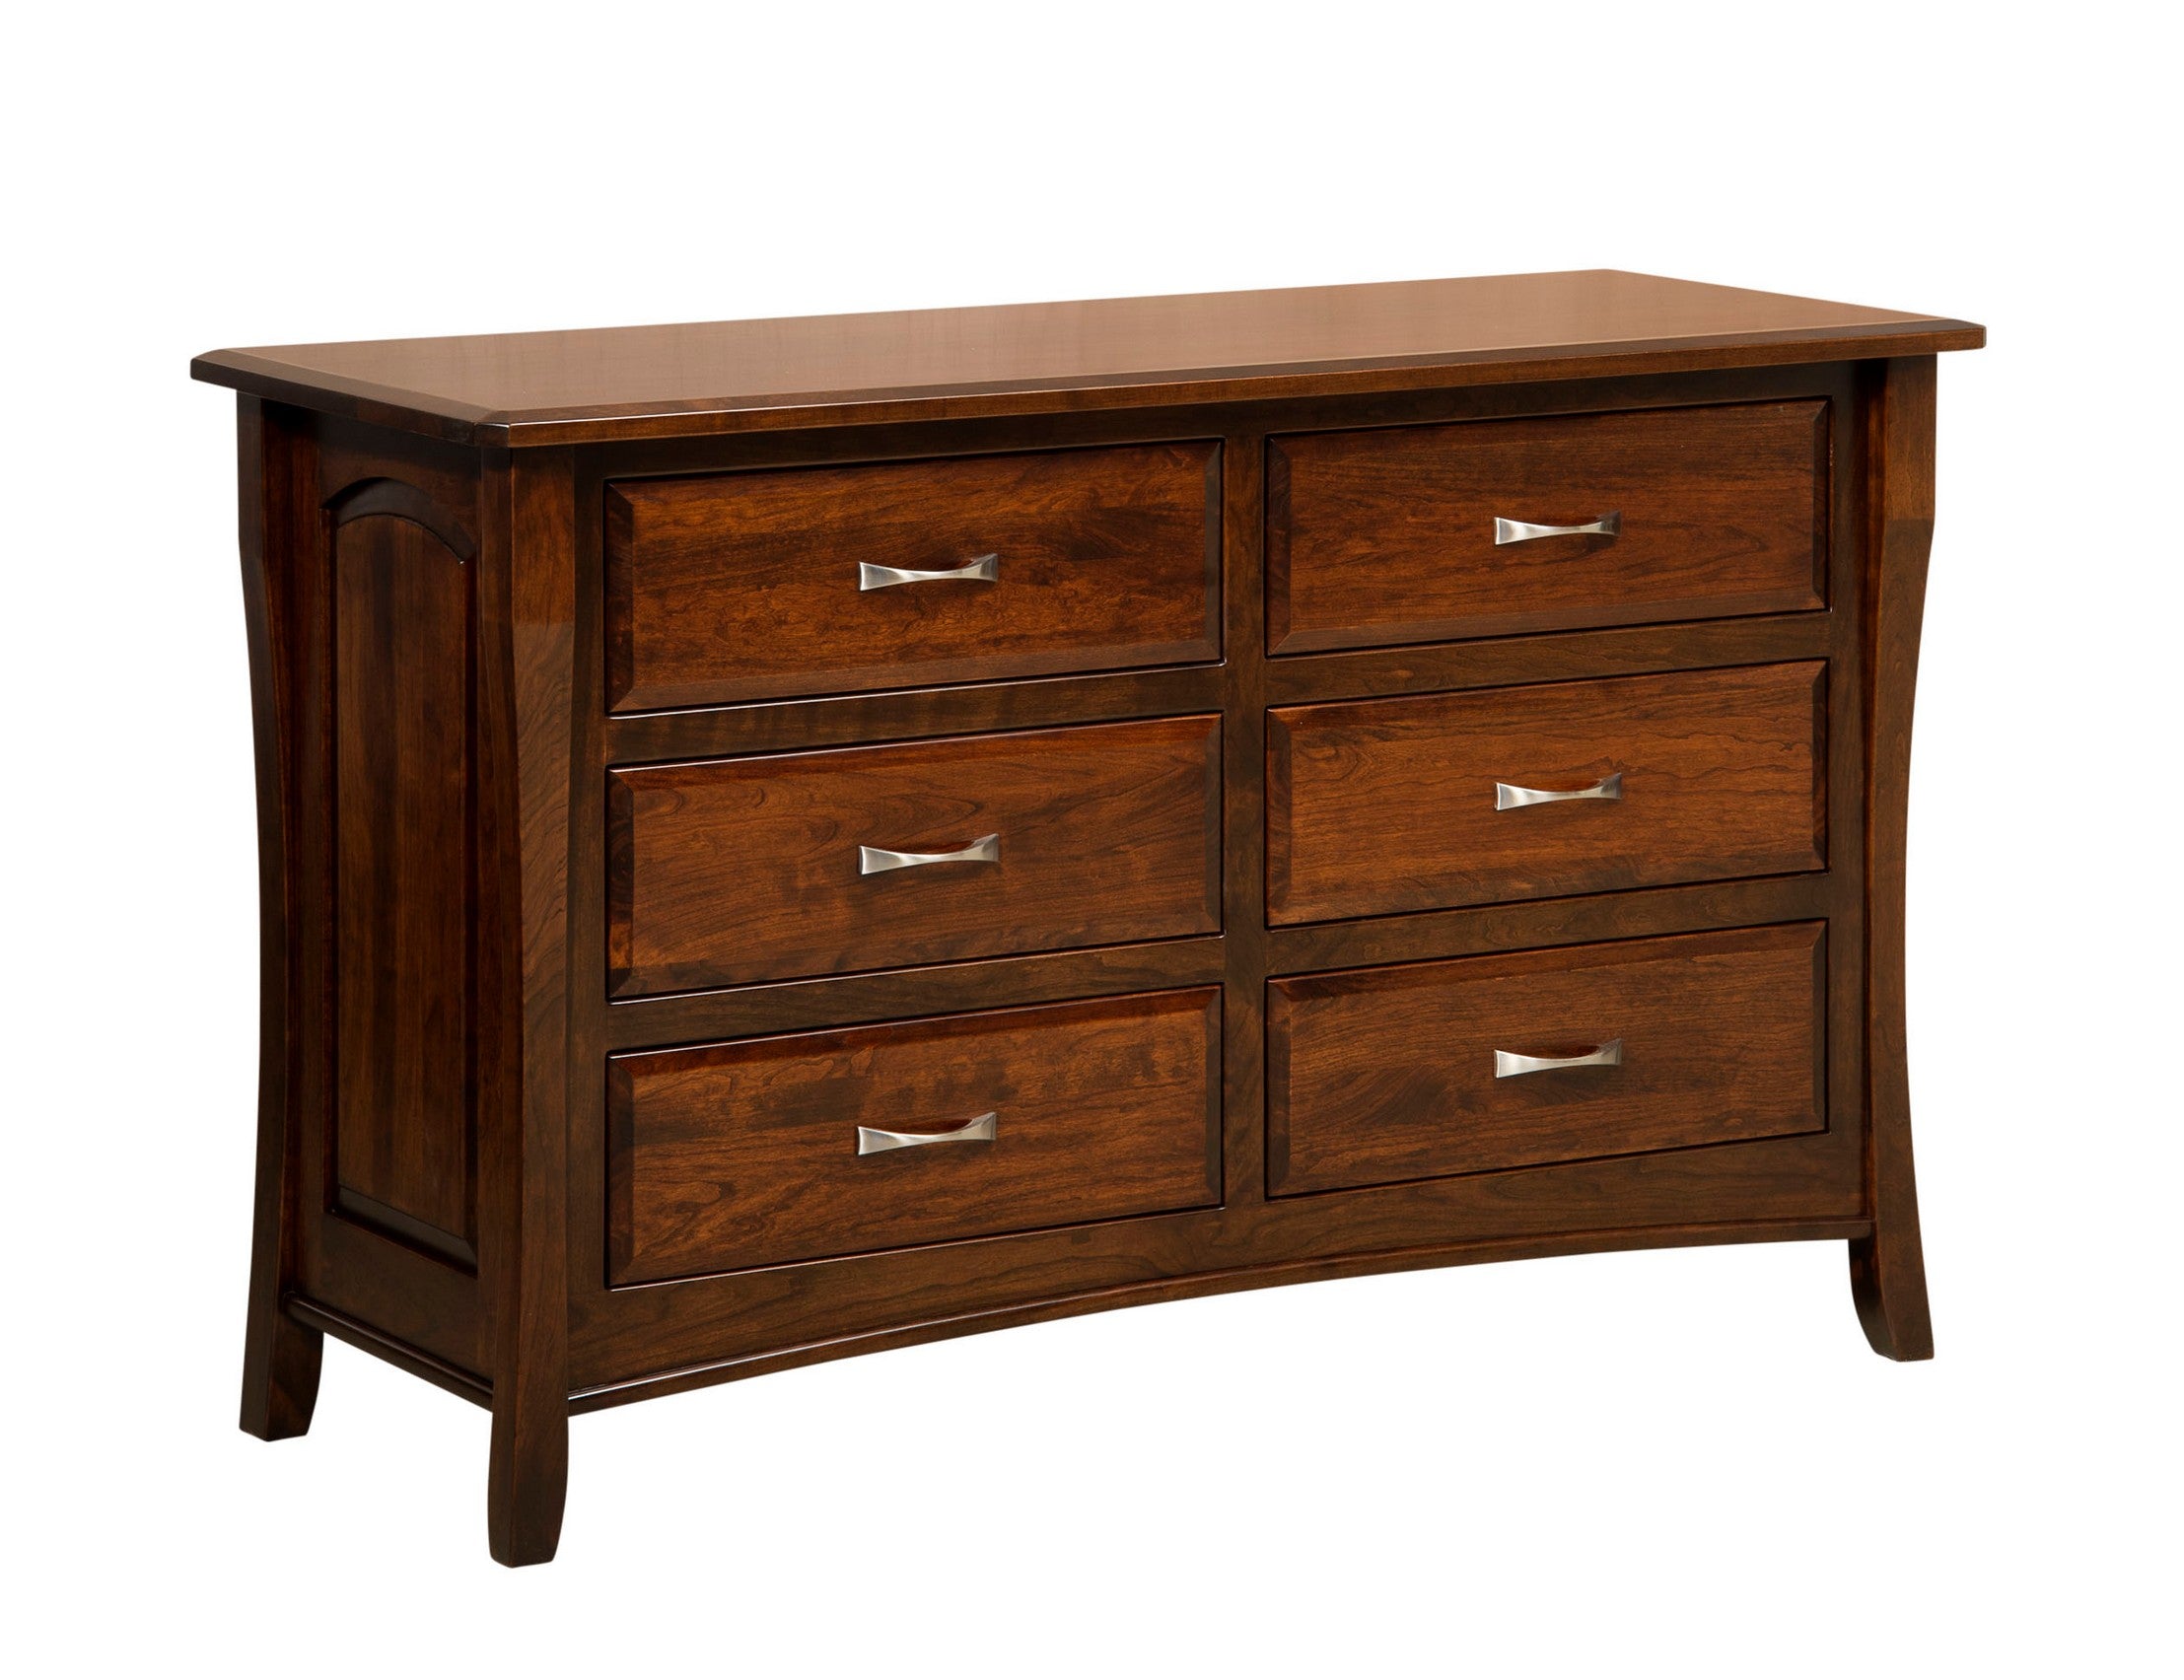 berkley six drawer dresser in sap cherry wood with rich tobacco stain